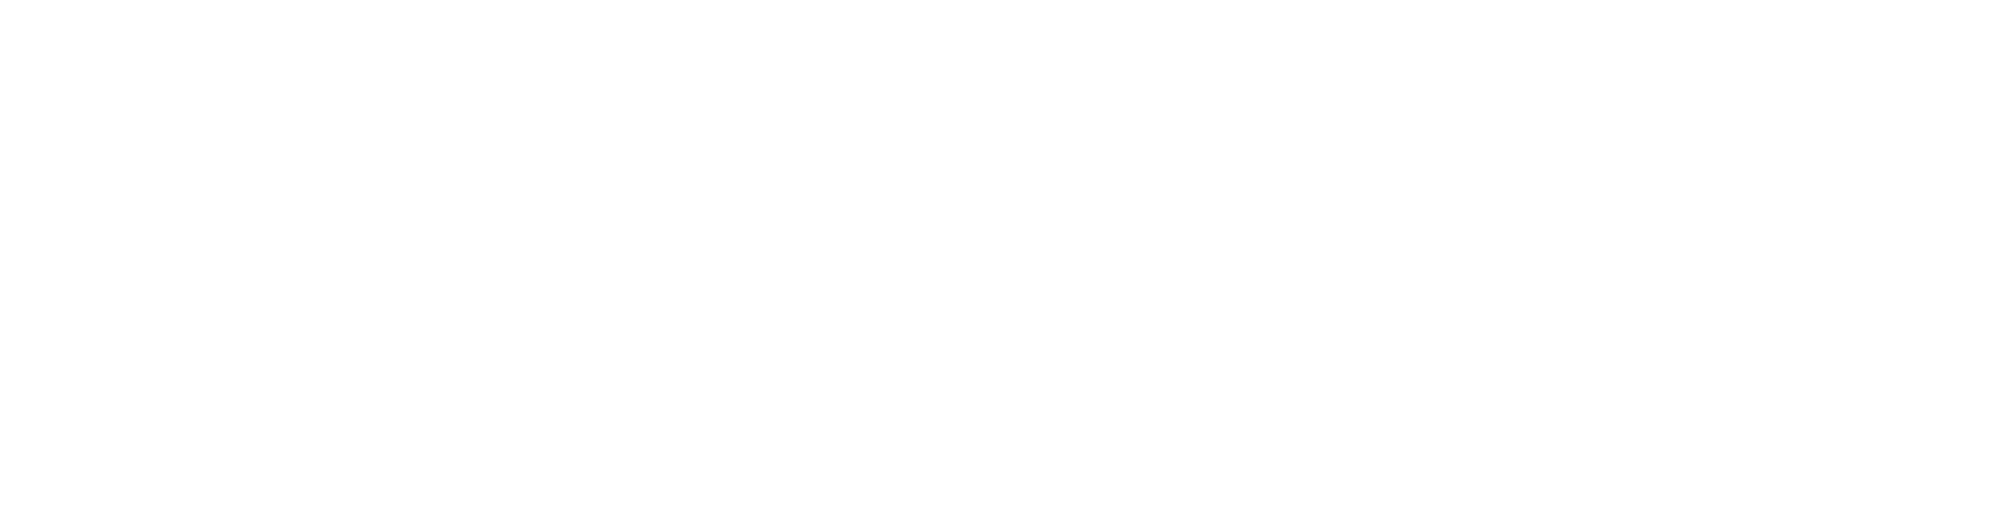 Cahiers Internationaux de Sciences Sociales 